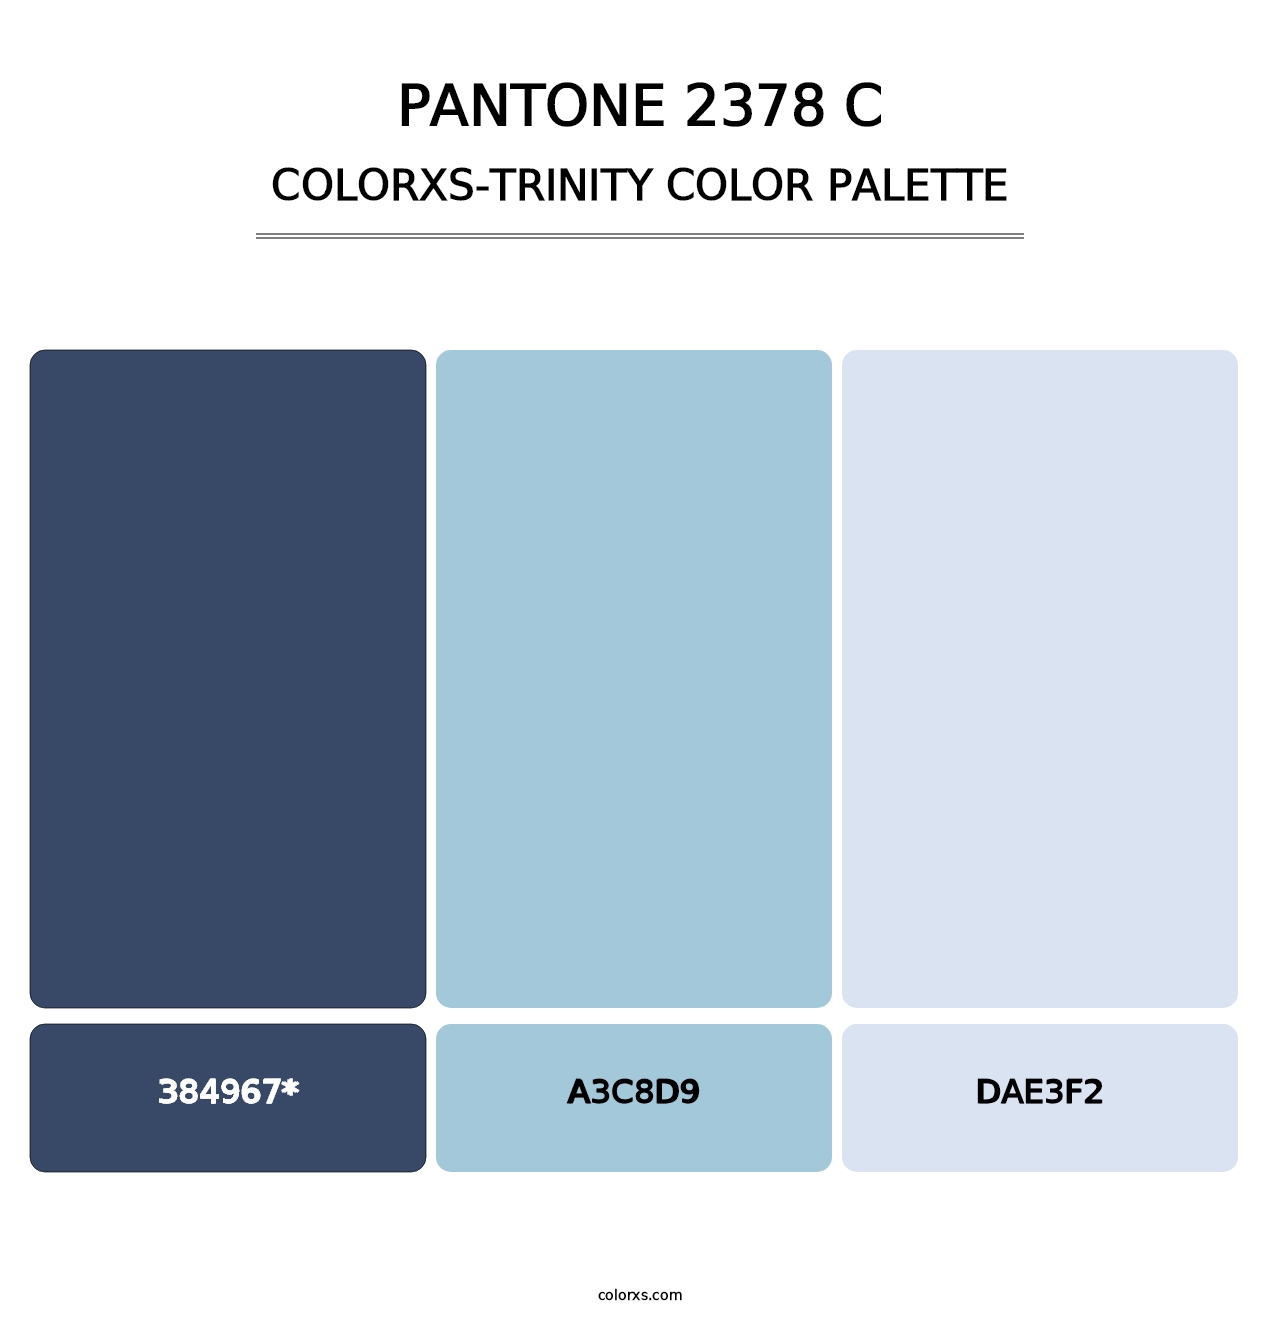 PANTONE 2378 C - Colorxs Trinity Palette